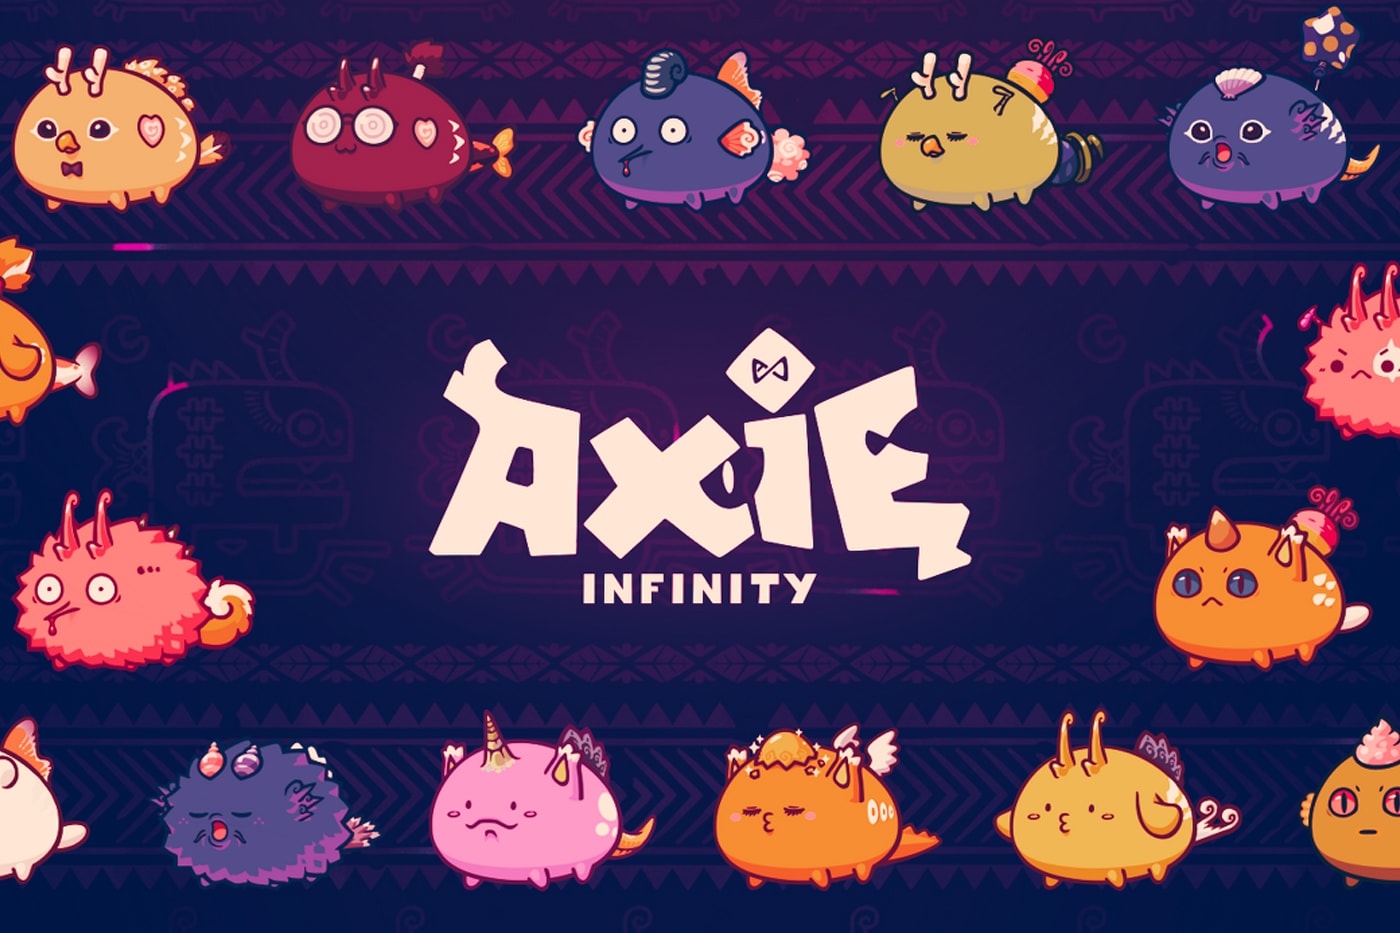 《Axie Infinity》成為首個銷售額達 $11 億美金 NFT 遊戲